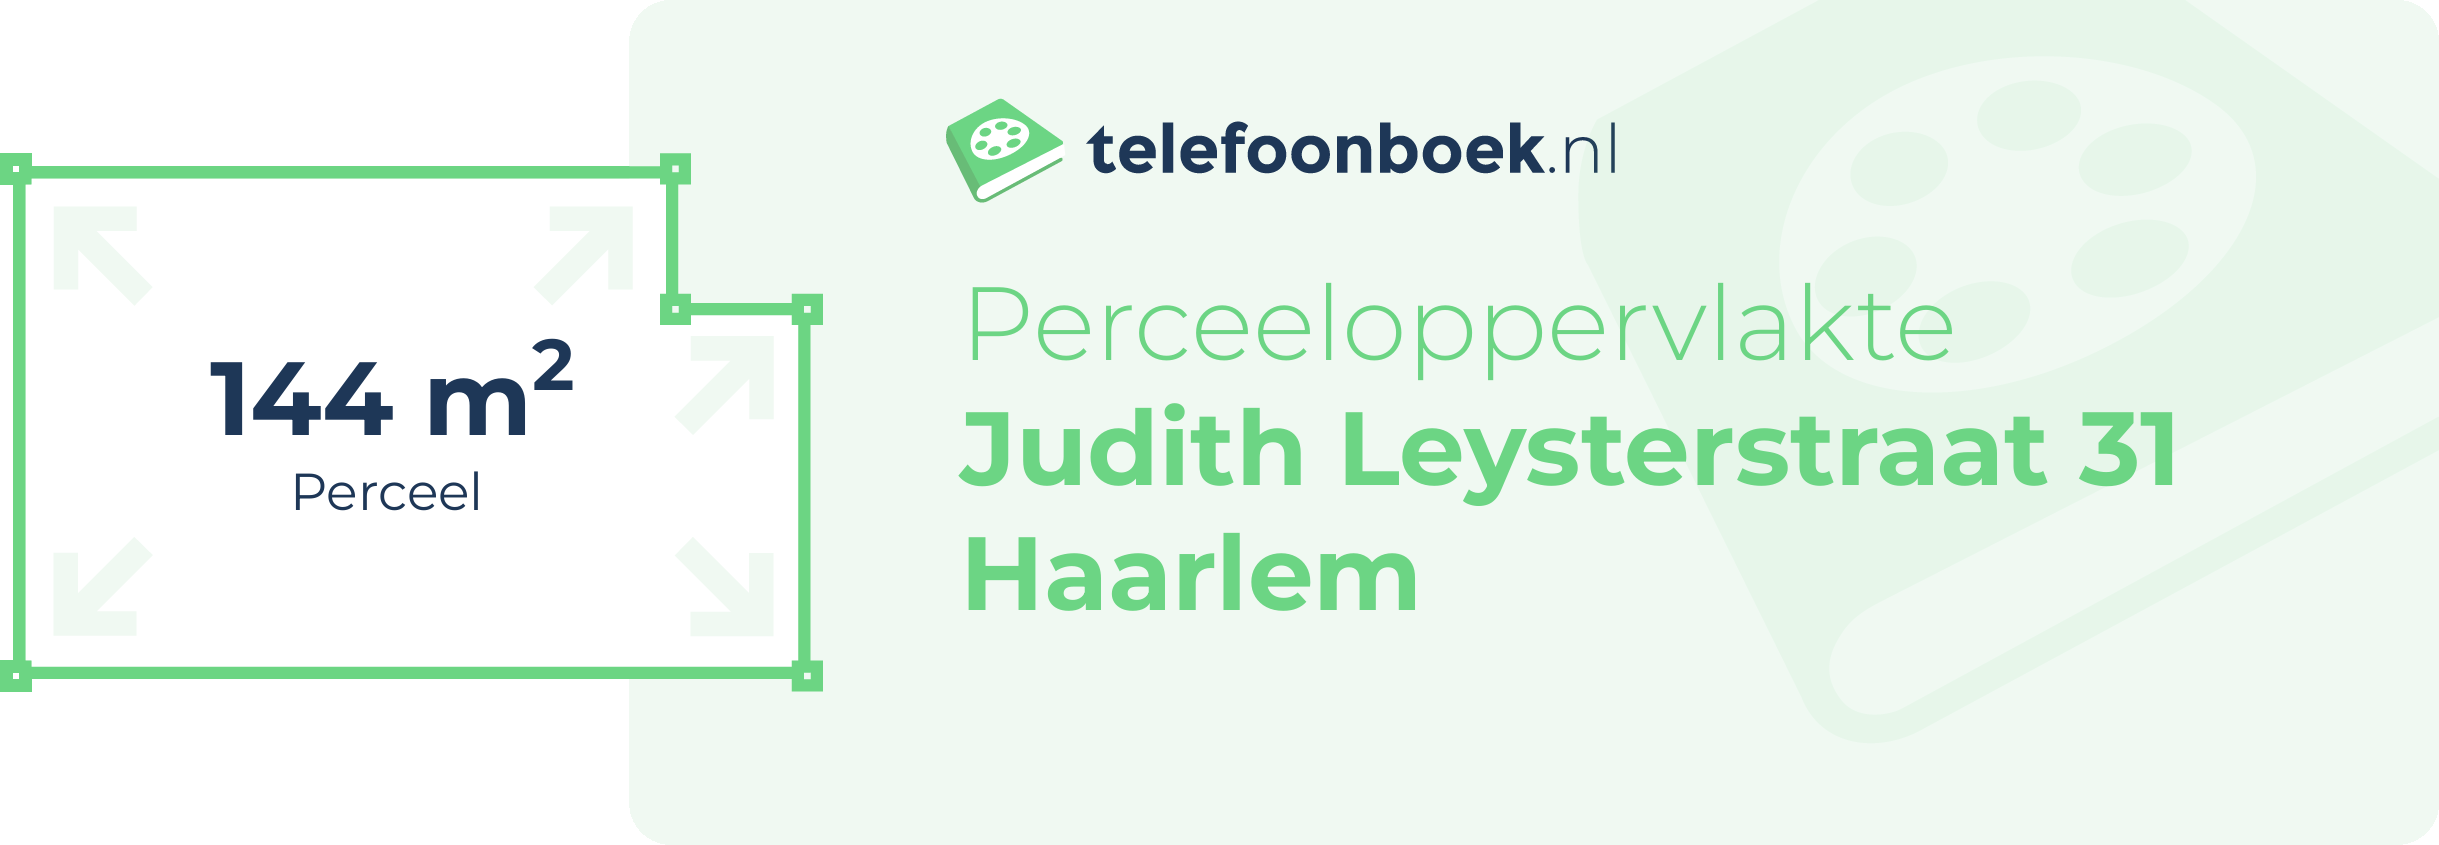 Perceeloppervlakte Judith Leysterstraat 31 Haarlem